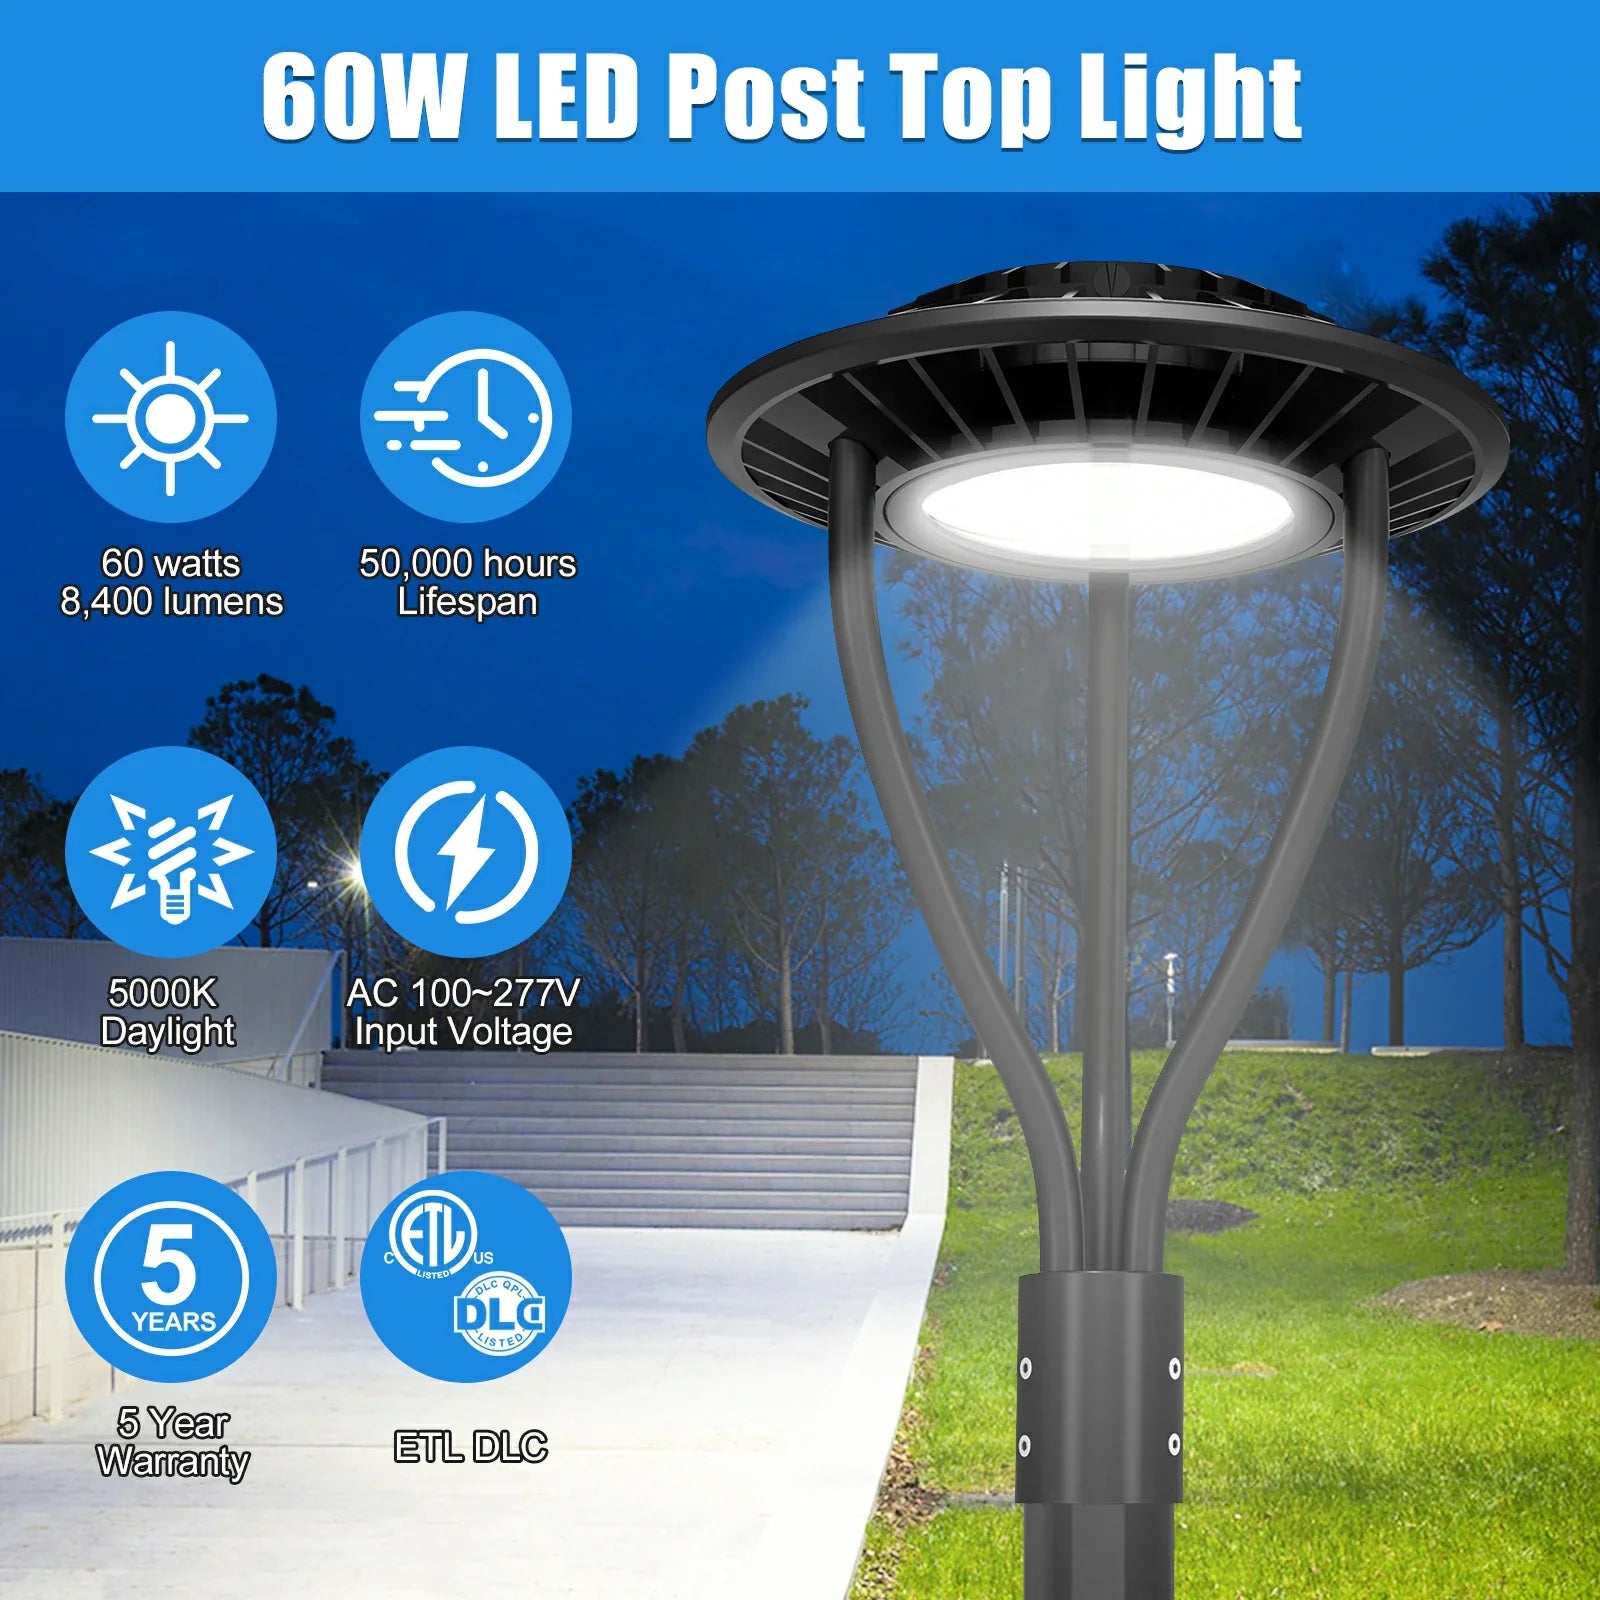 LED Post Top Light 60W